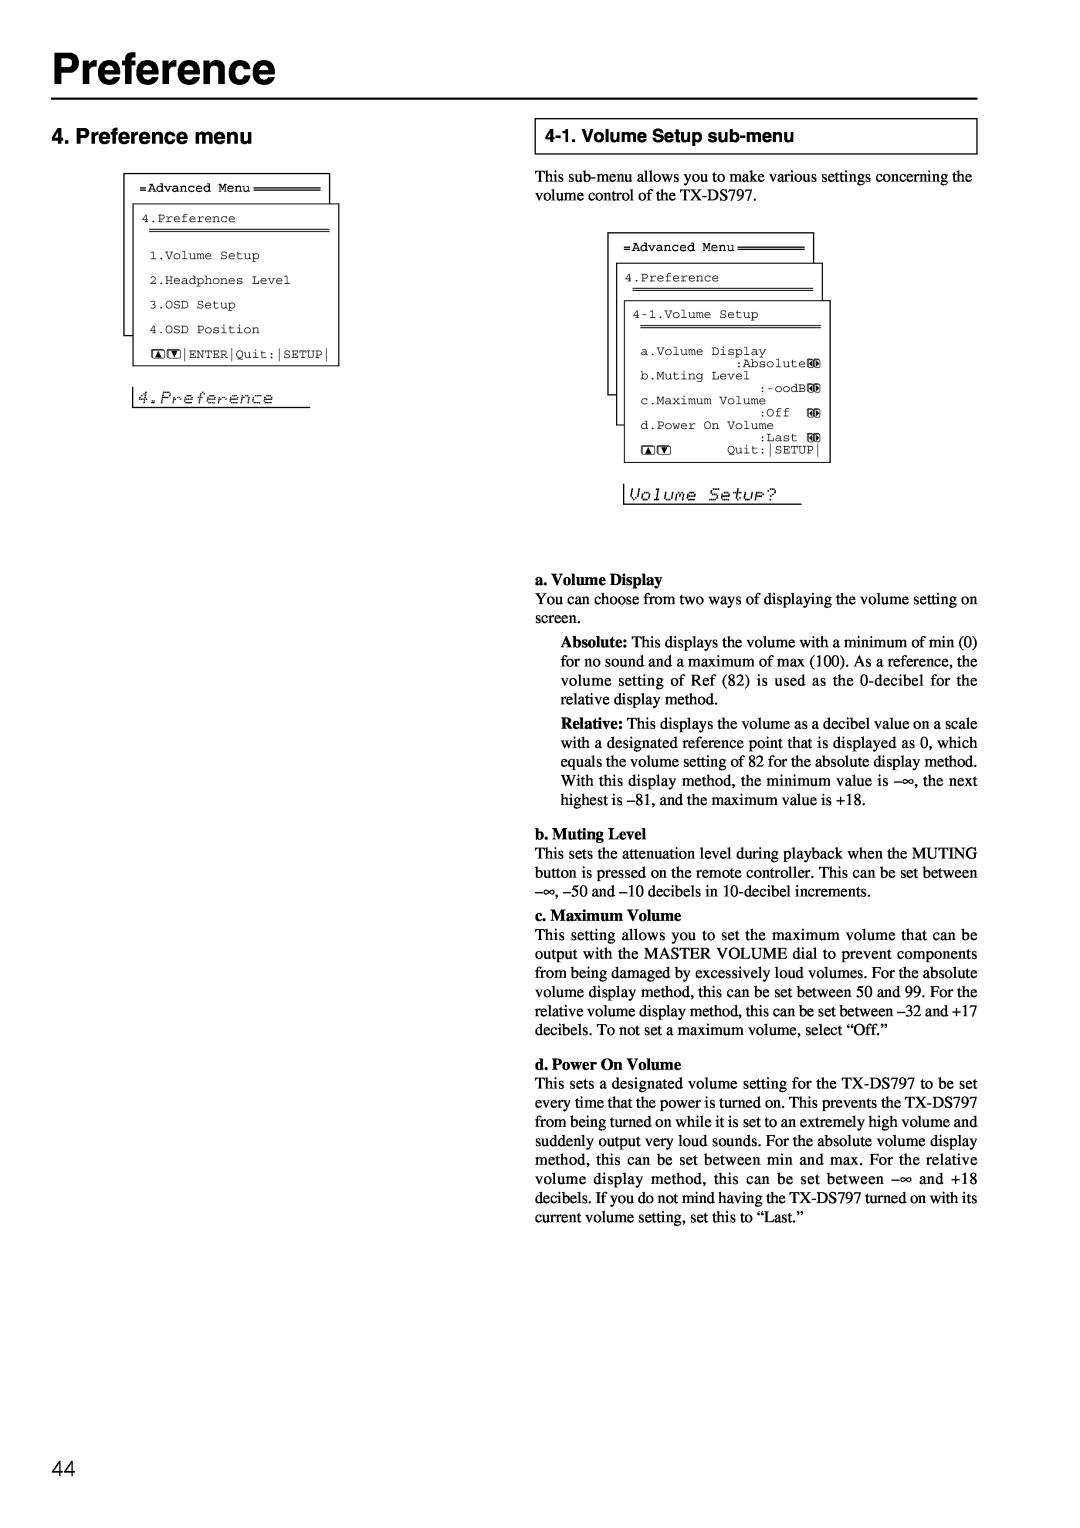 Onkyo TX-DS797 instruction manual Preference menu, Volume Setup sub-menu 